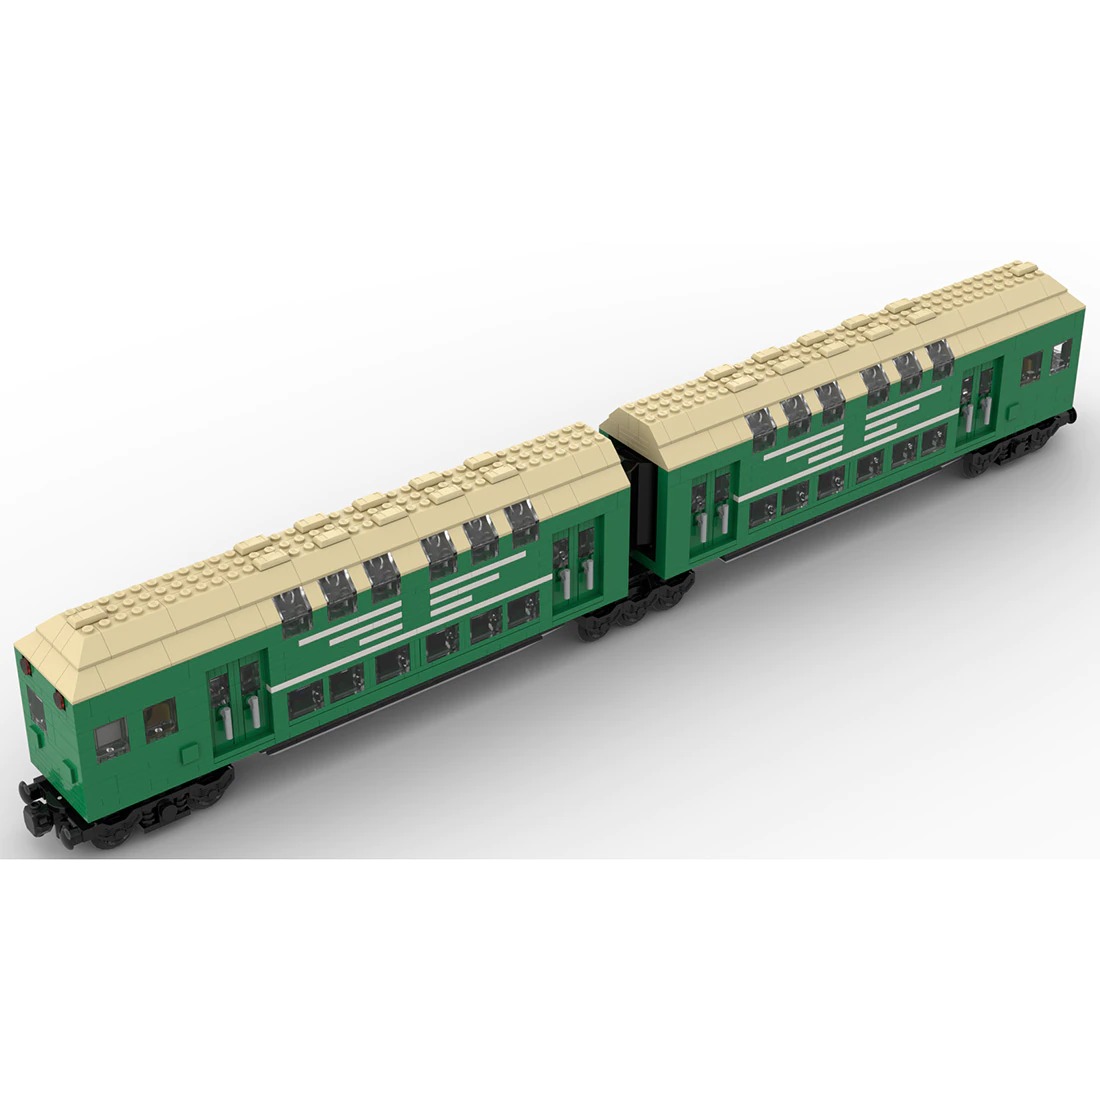 authorized moc 109281 7 axle train carri main 2 2 - CADA Block